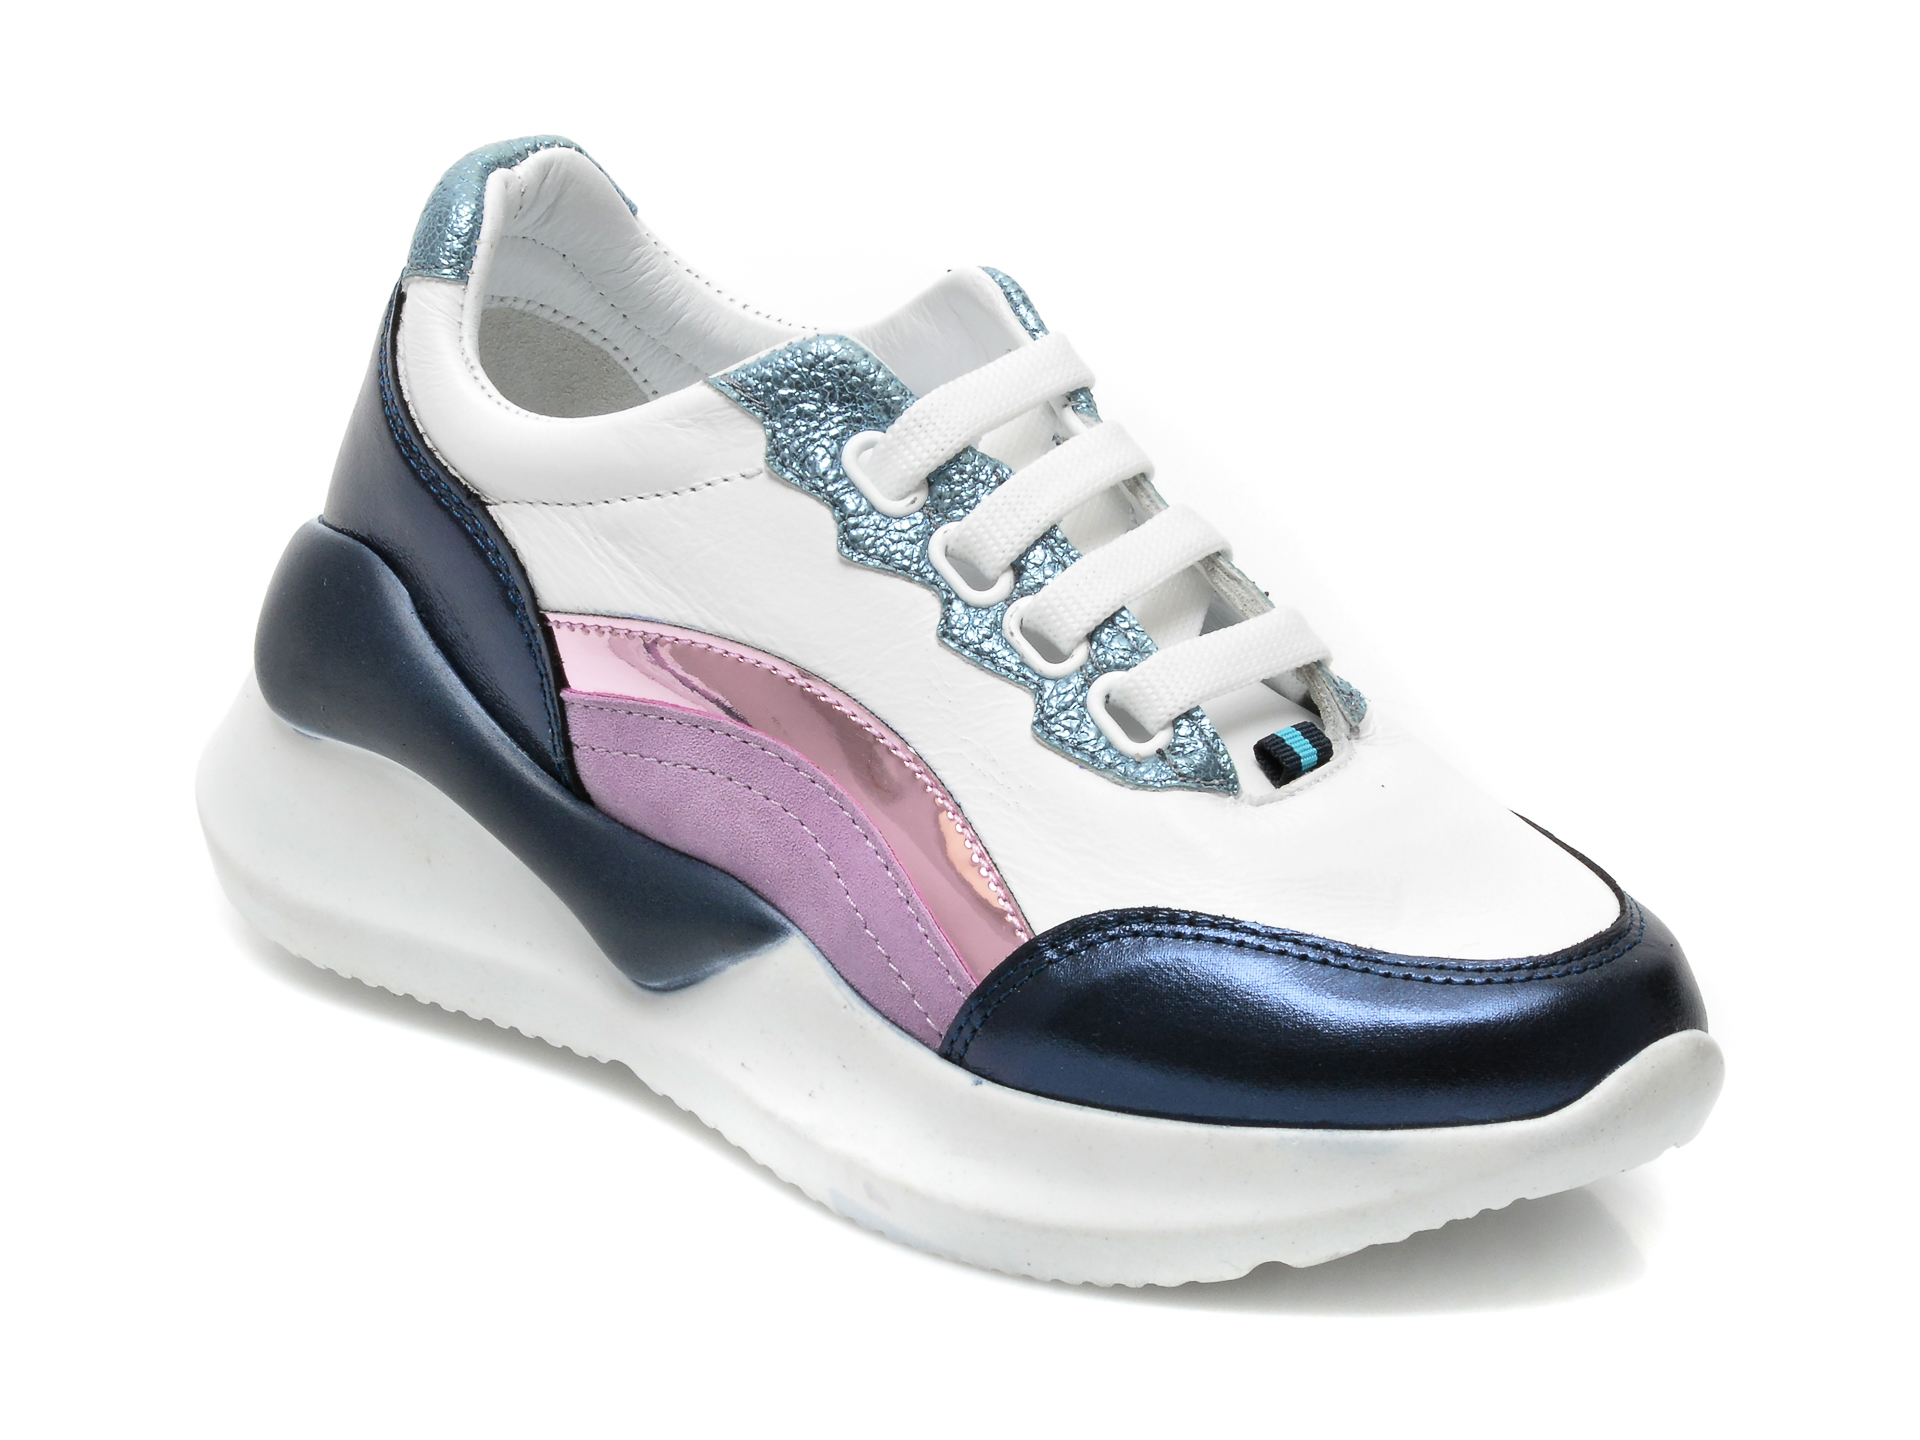 Pantofi sport DONNA STYLE albi, 212, din piele naturala Donna Style